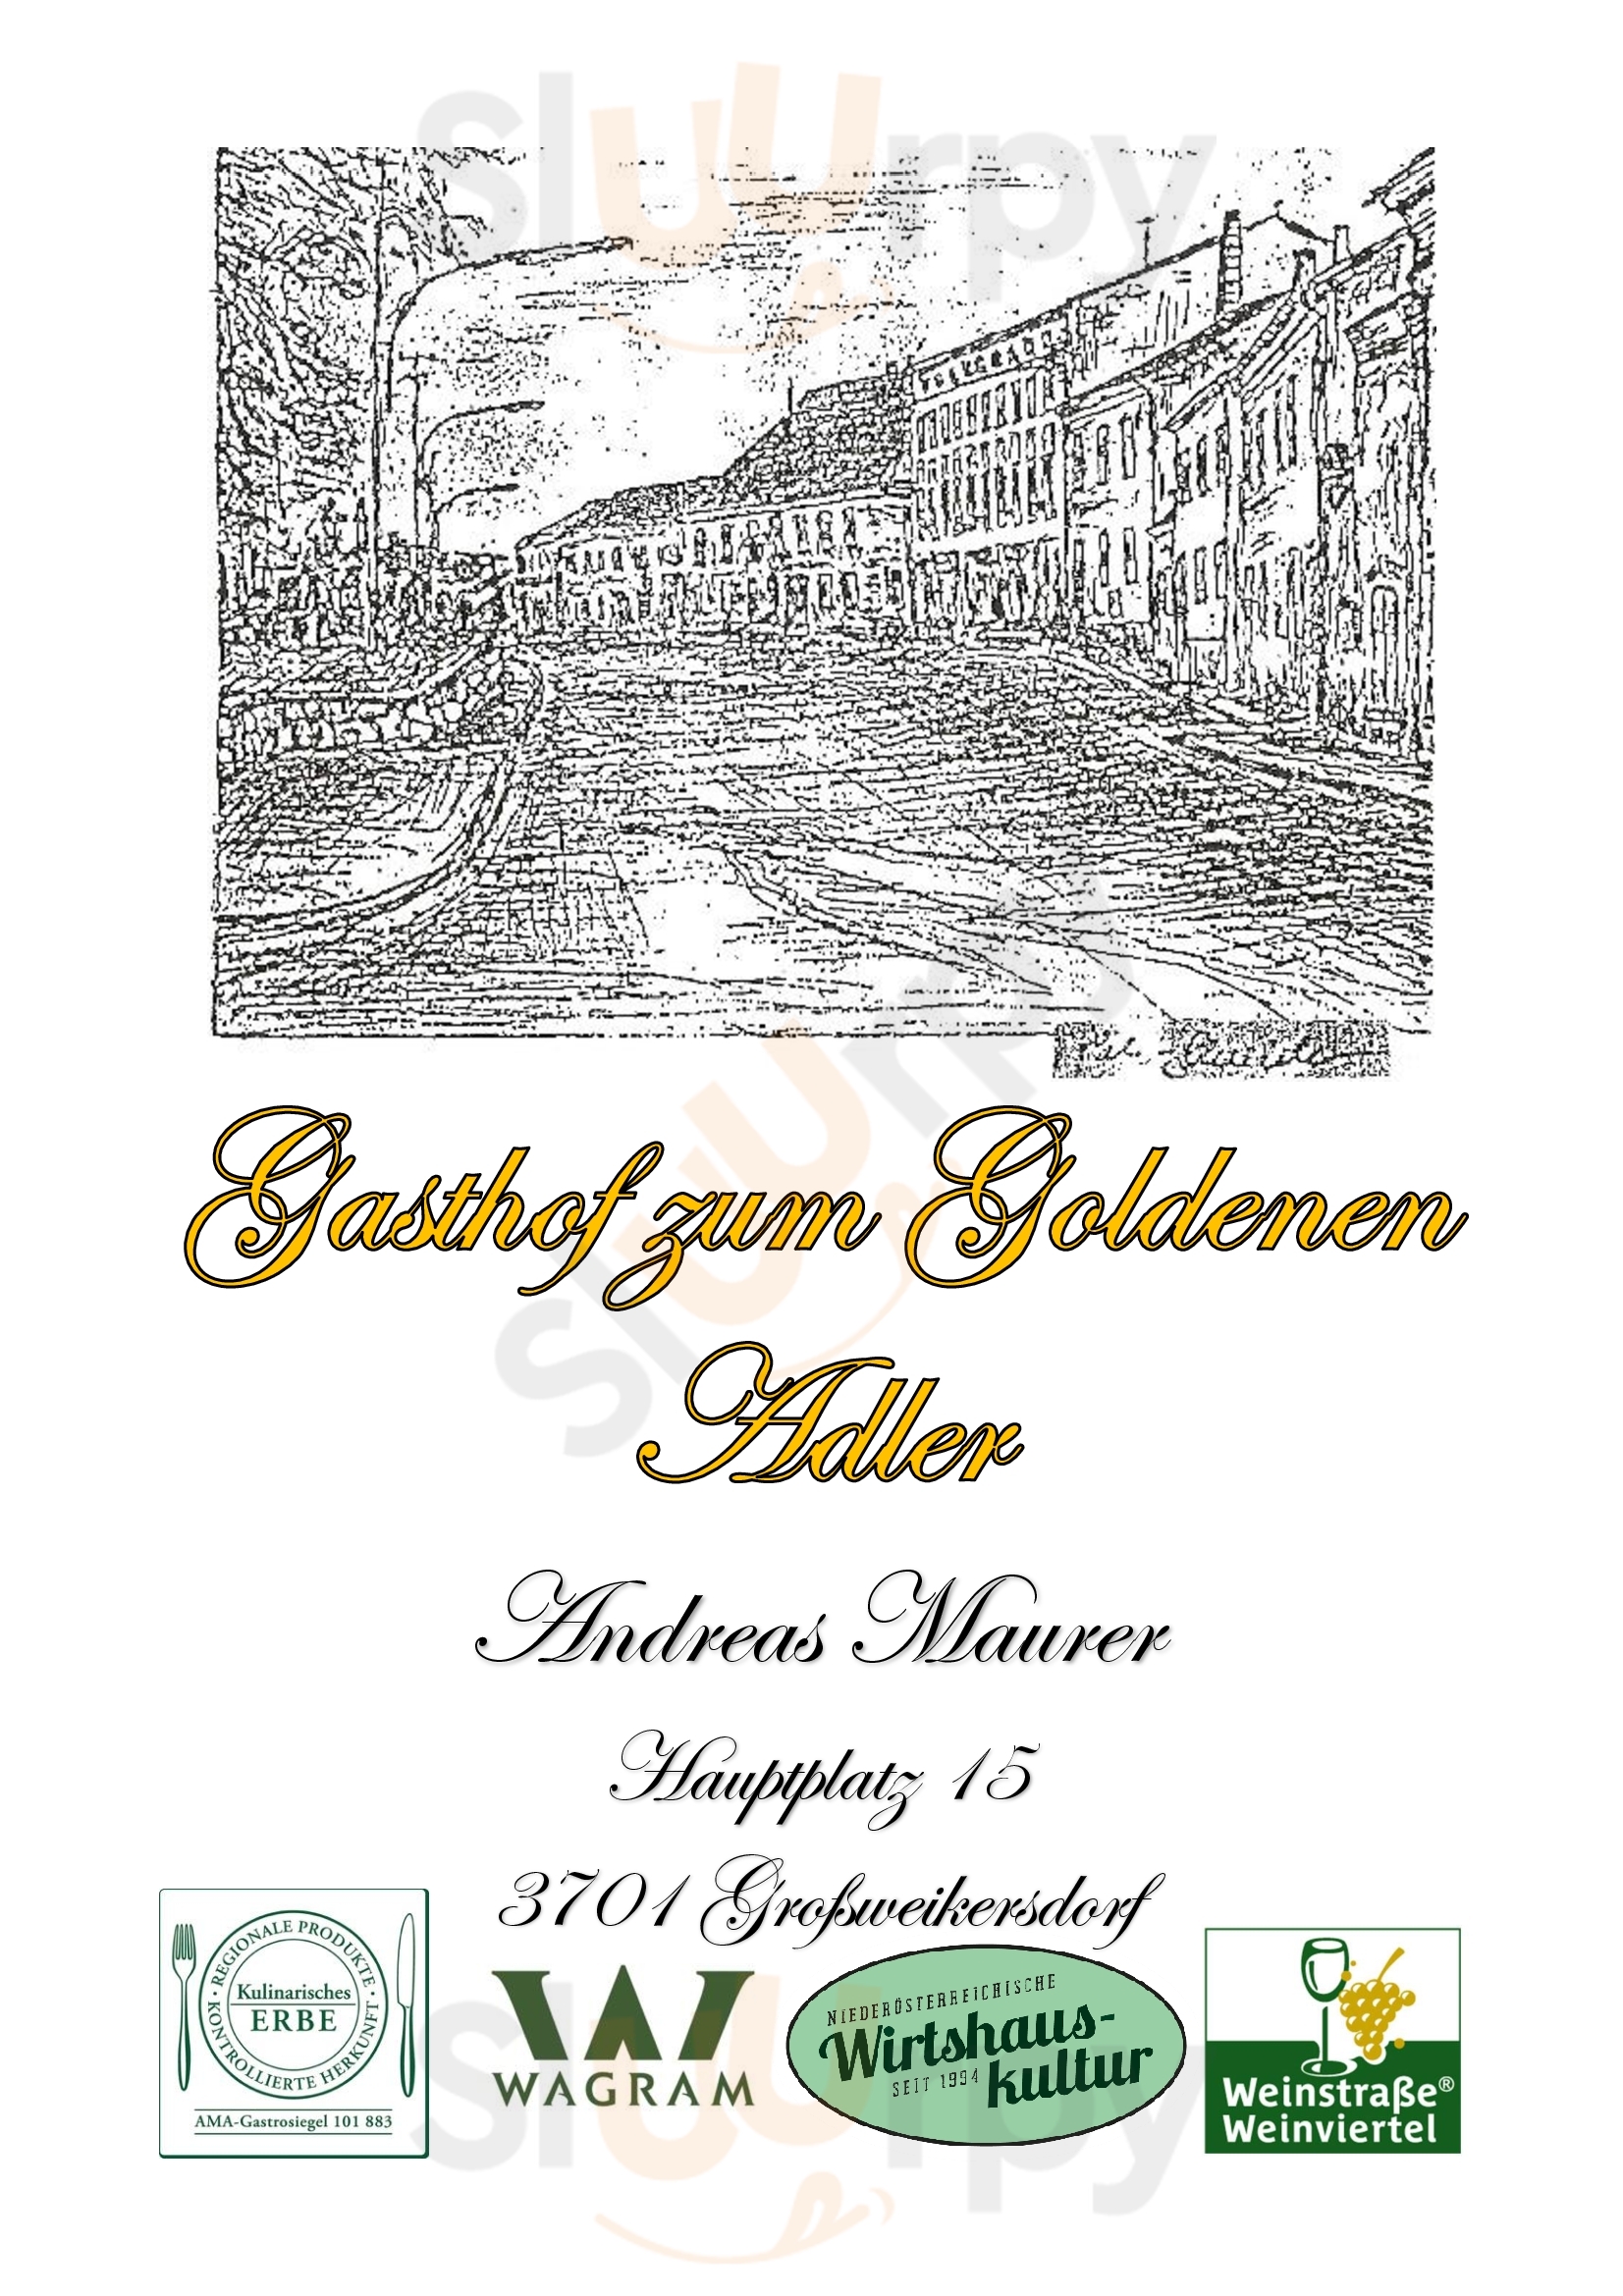 Gasthof "zum Goldenen Adler" Andreas Maurer Großweikersdorf Menu - 1